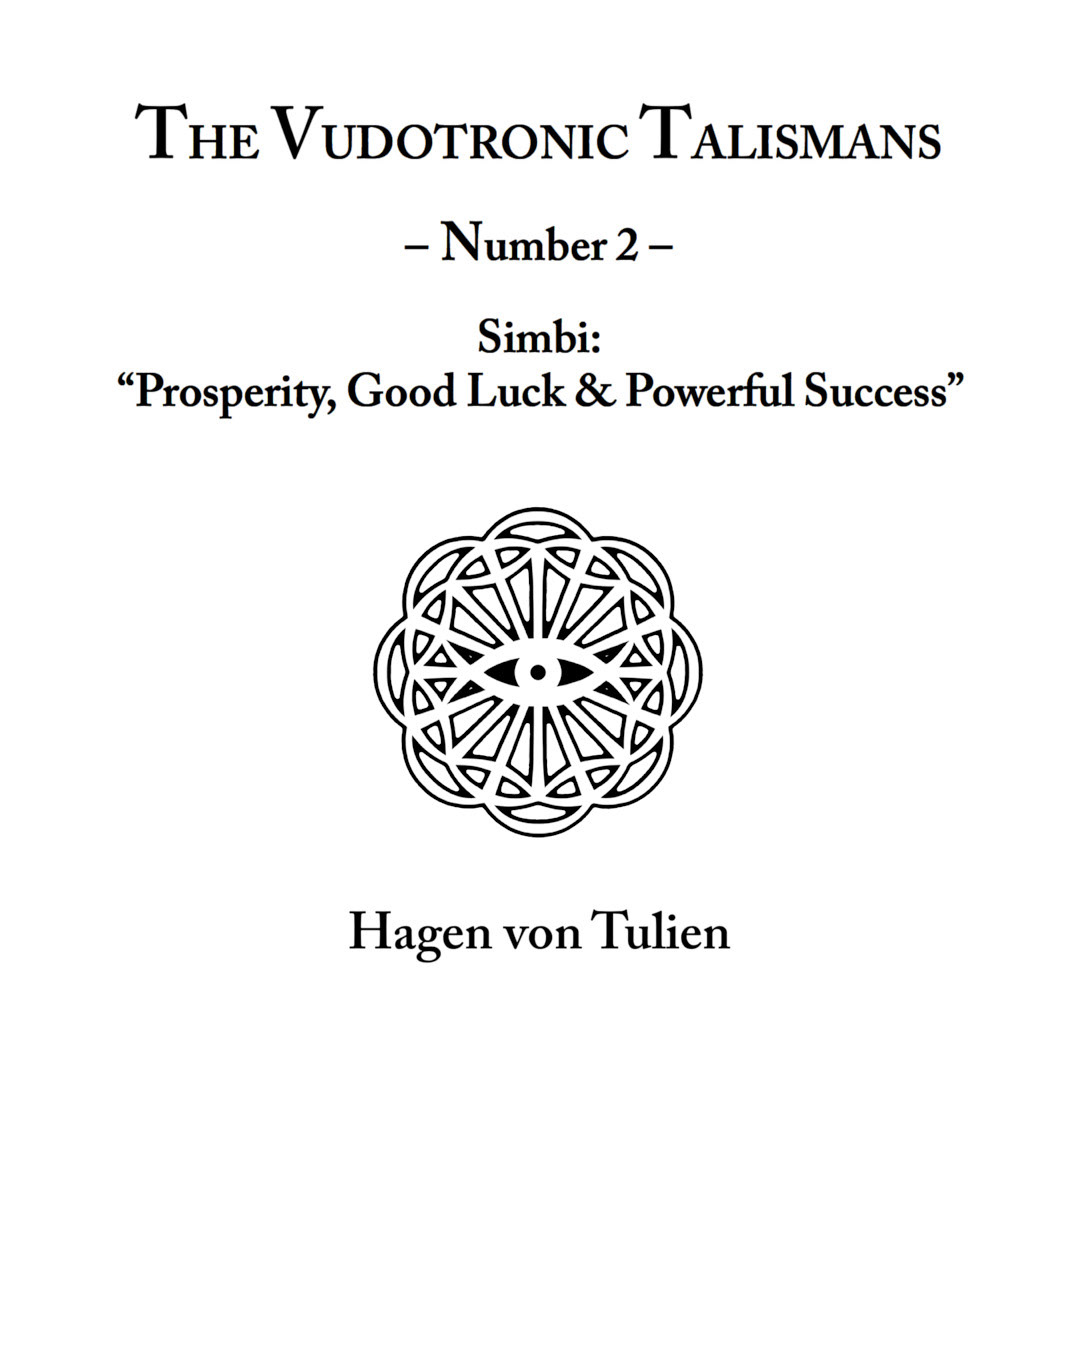 talisman simbi prosperity Good Luck success VonZos Voudon Gnosis Vudotronic